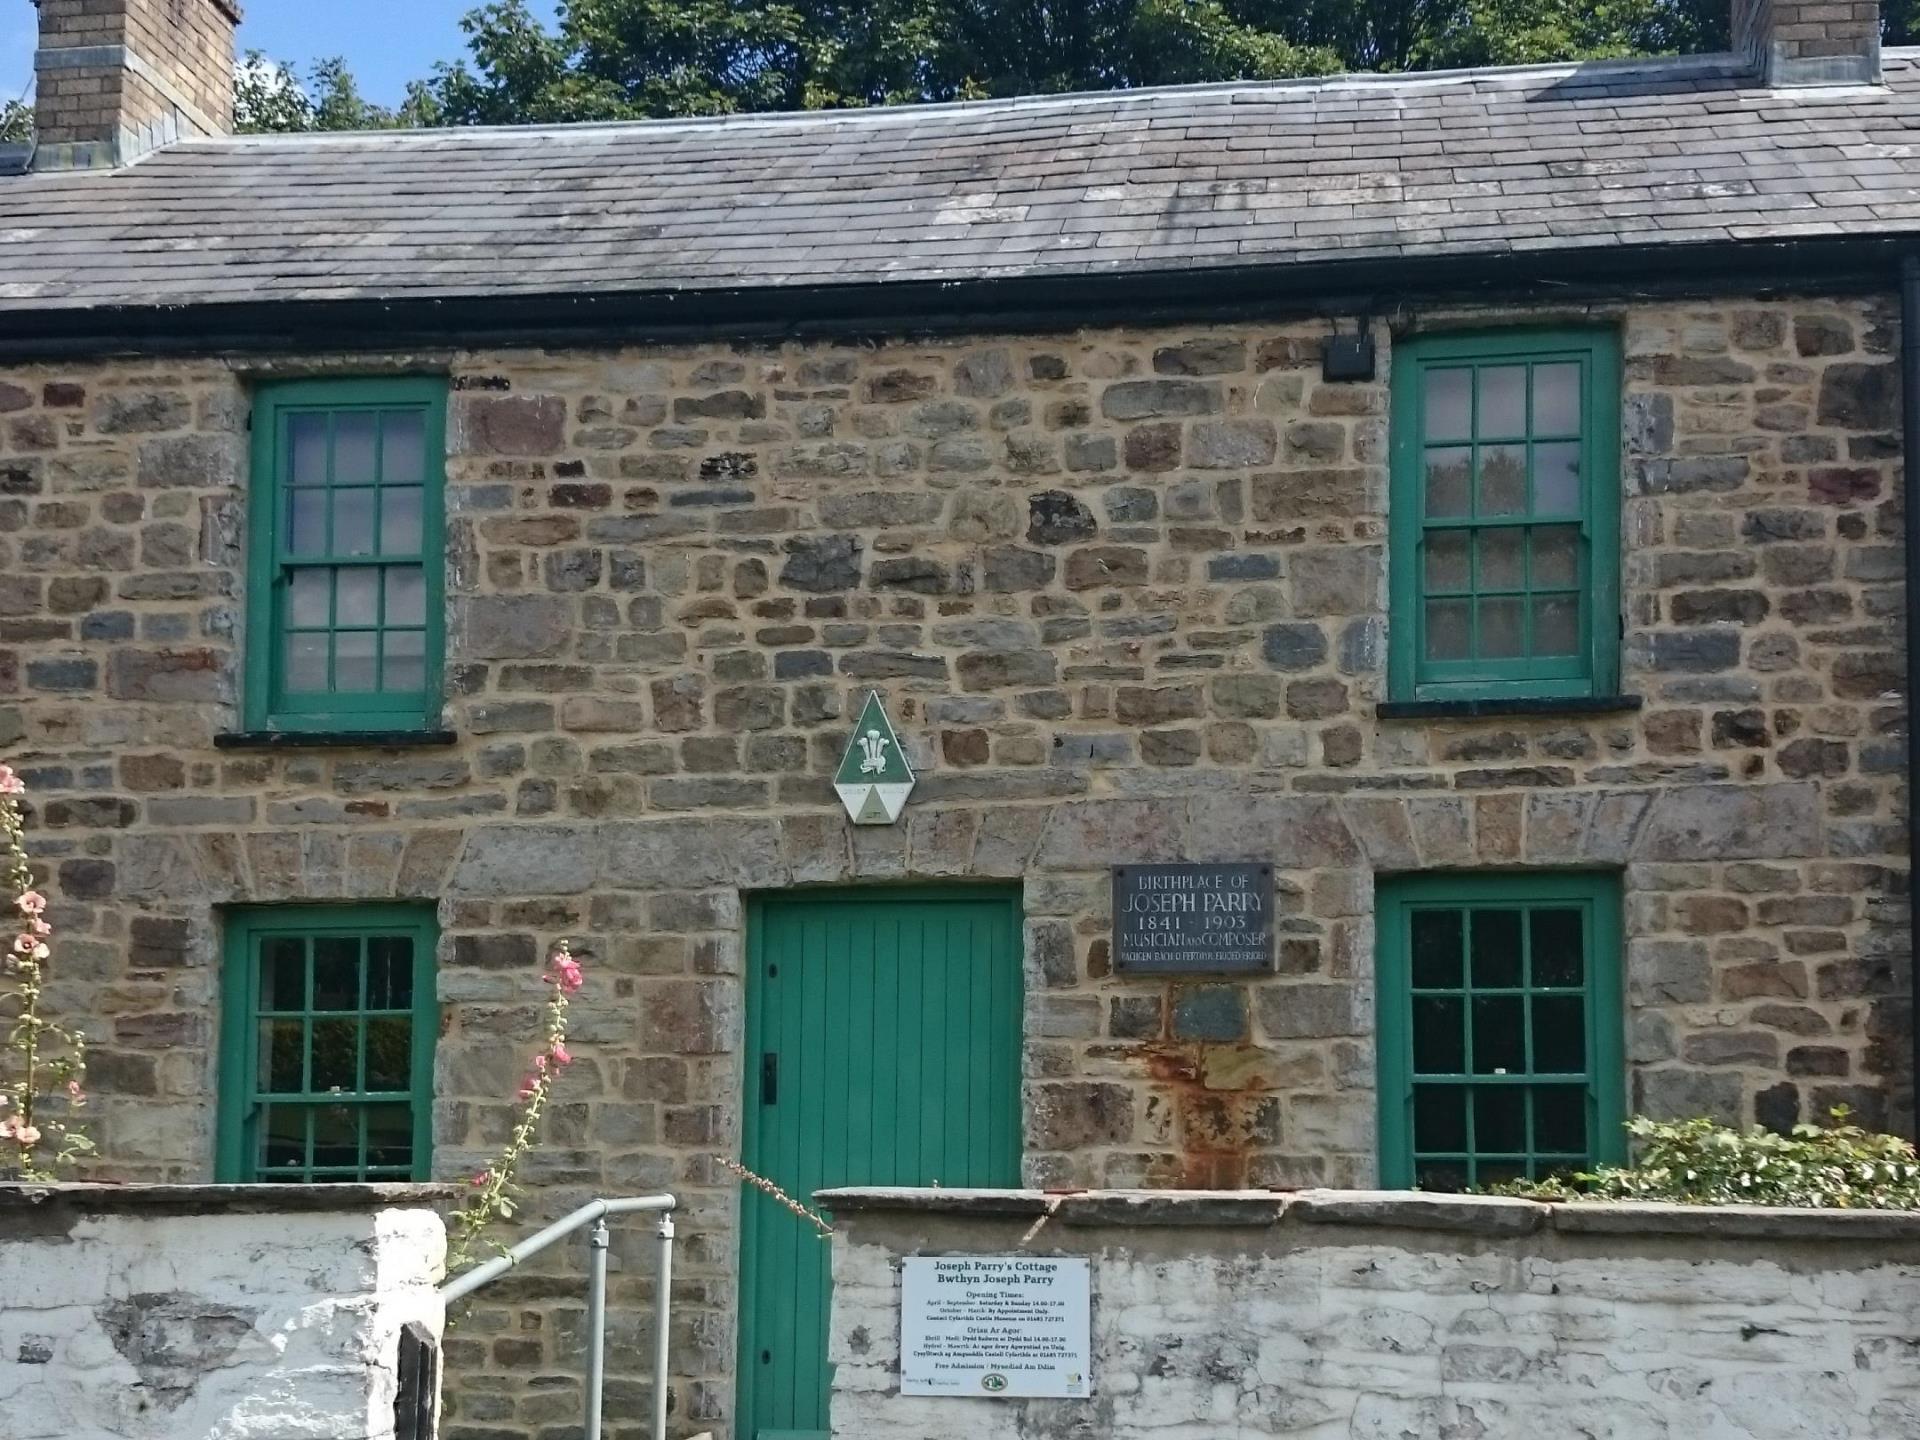 Joseph Parry's Ironworker's Cottage